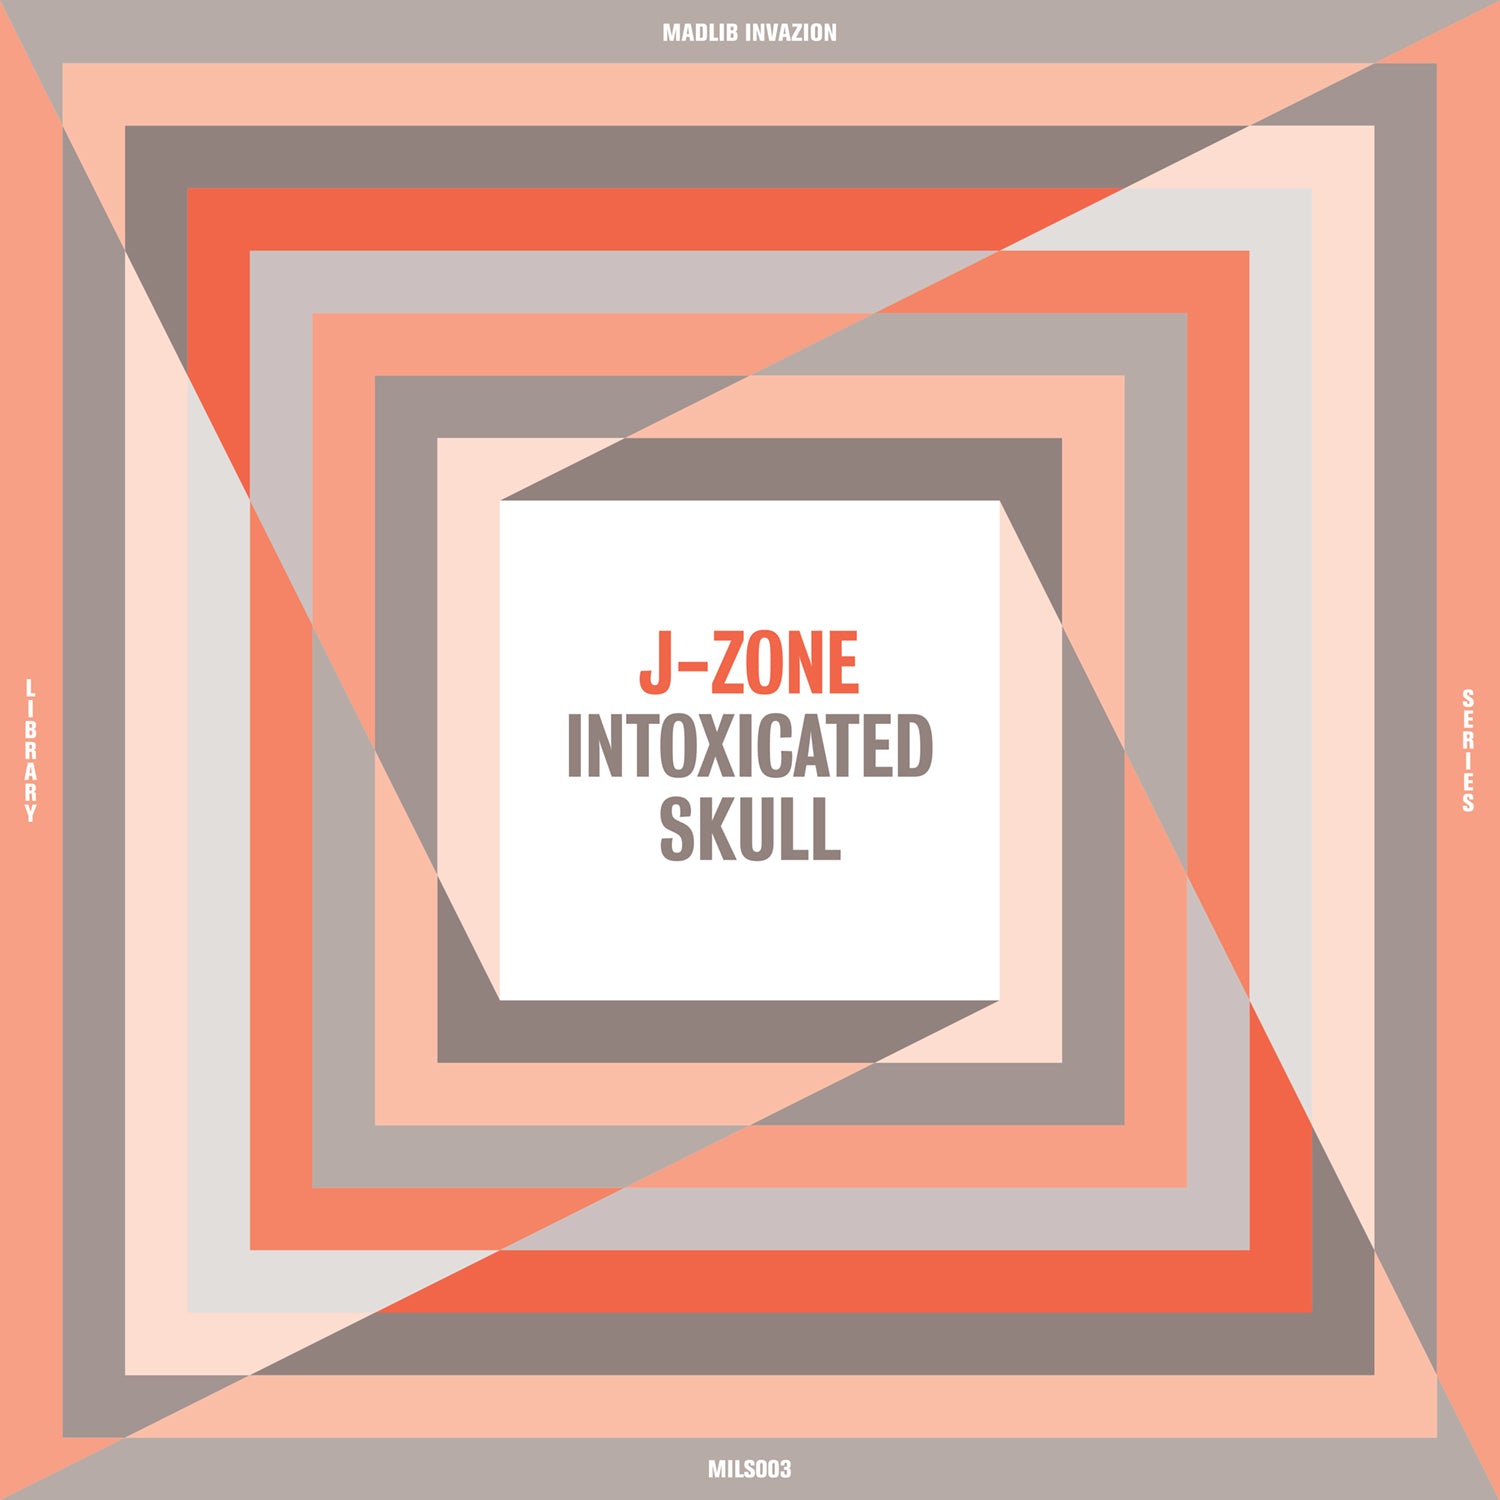 J-Zone - Intoxicated Skull (Madlib Invazion Music Library Series #3)